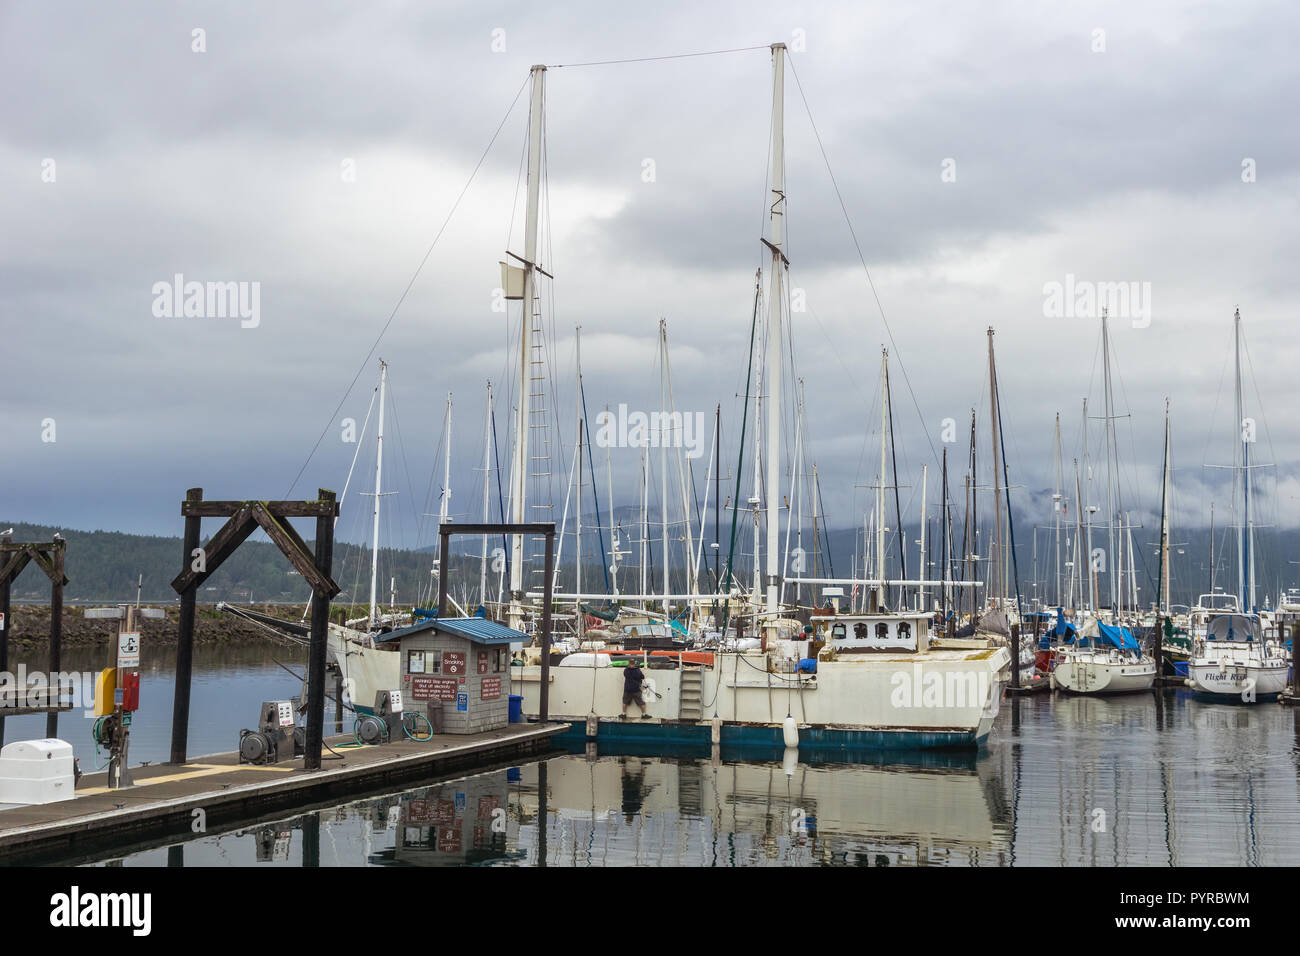 Trawler or fishing boat berthing in the Sequim marina or habour or port, Olympic Peninsula, Washington state, USA. Stock Photo